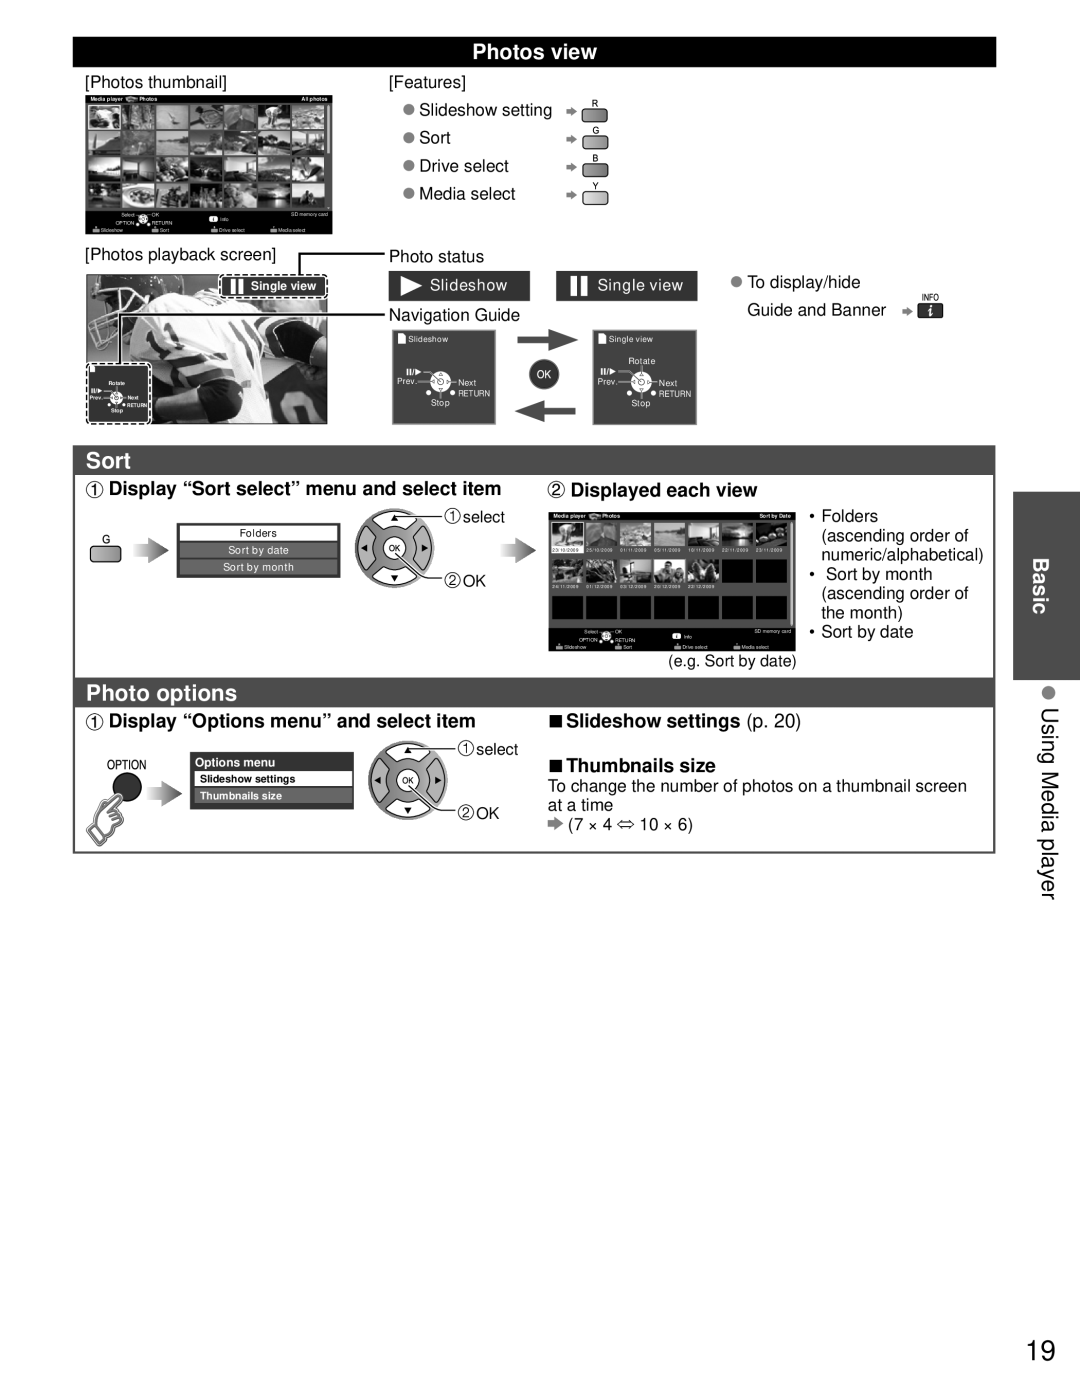 Panasonic TC-P50U50 Photo options, Photos view, Basic, Display “Sort select” menu and select item, Displayed each view 